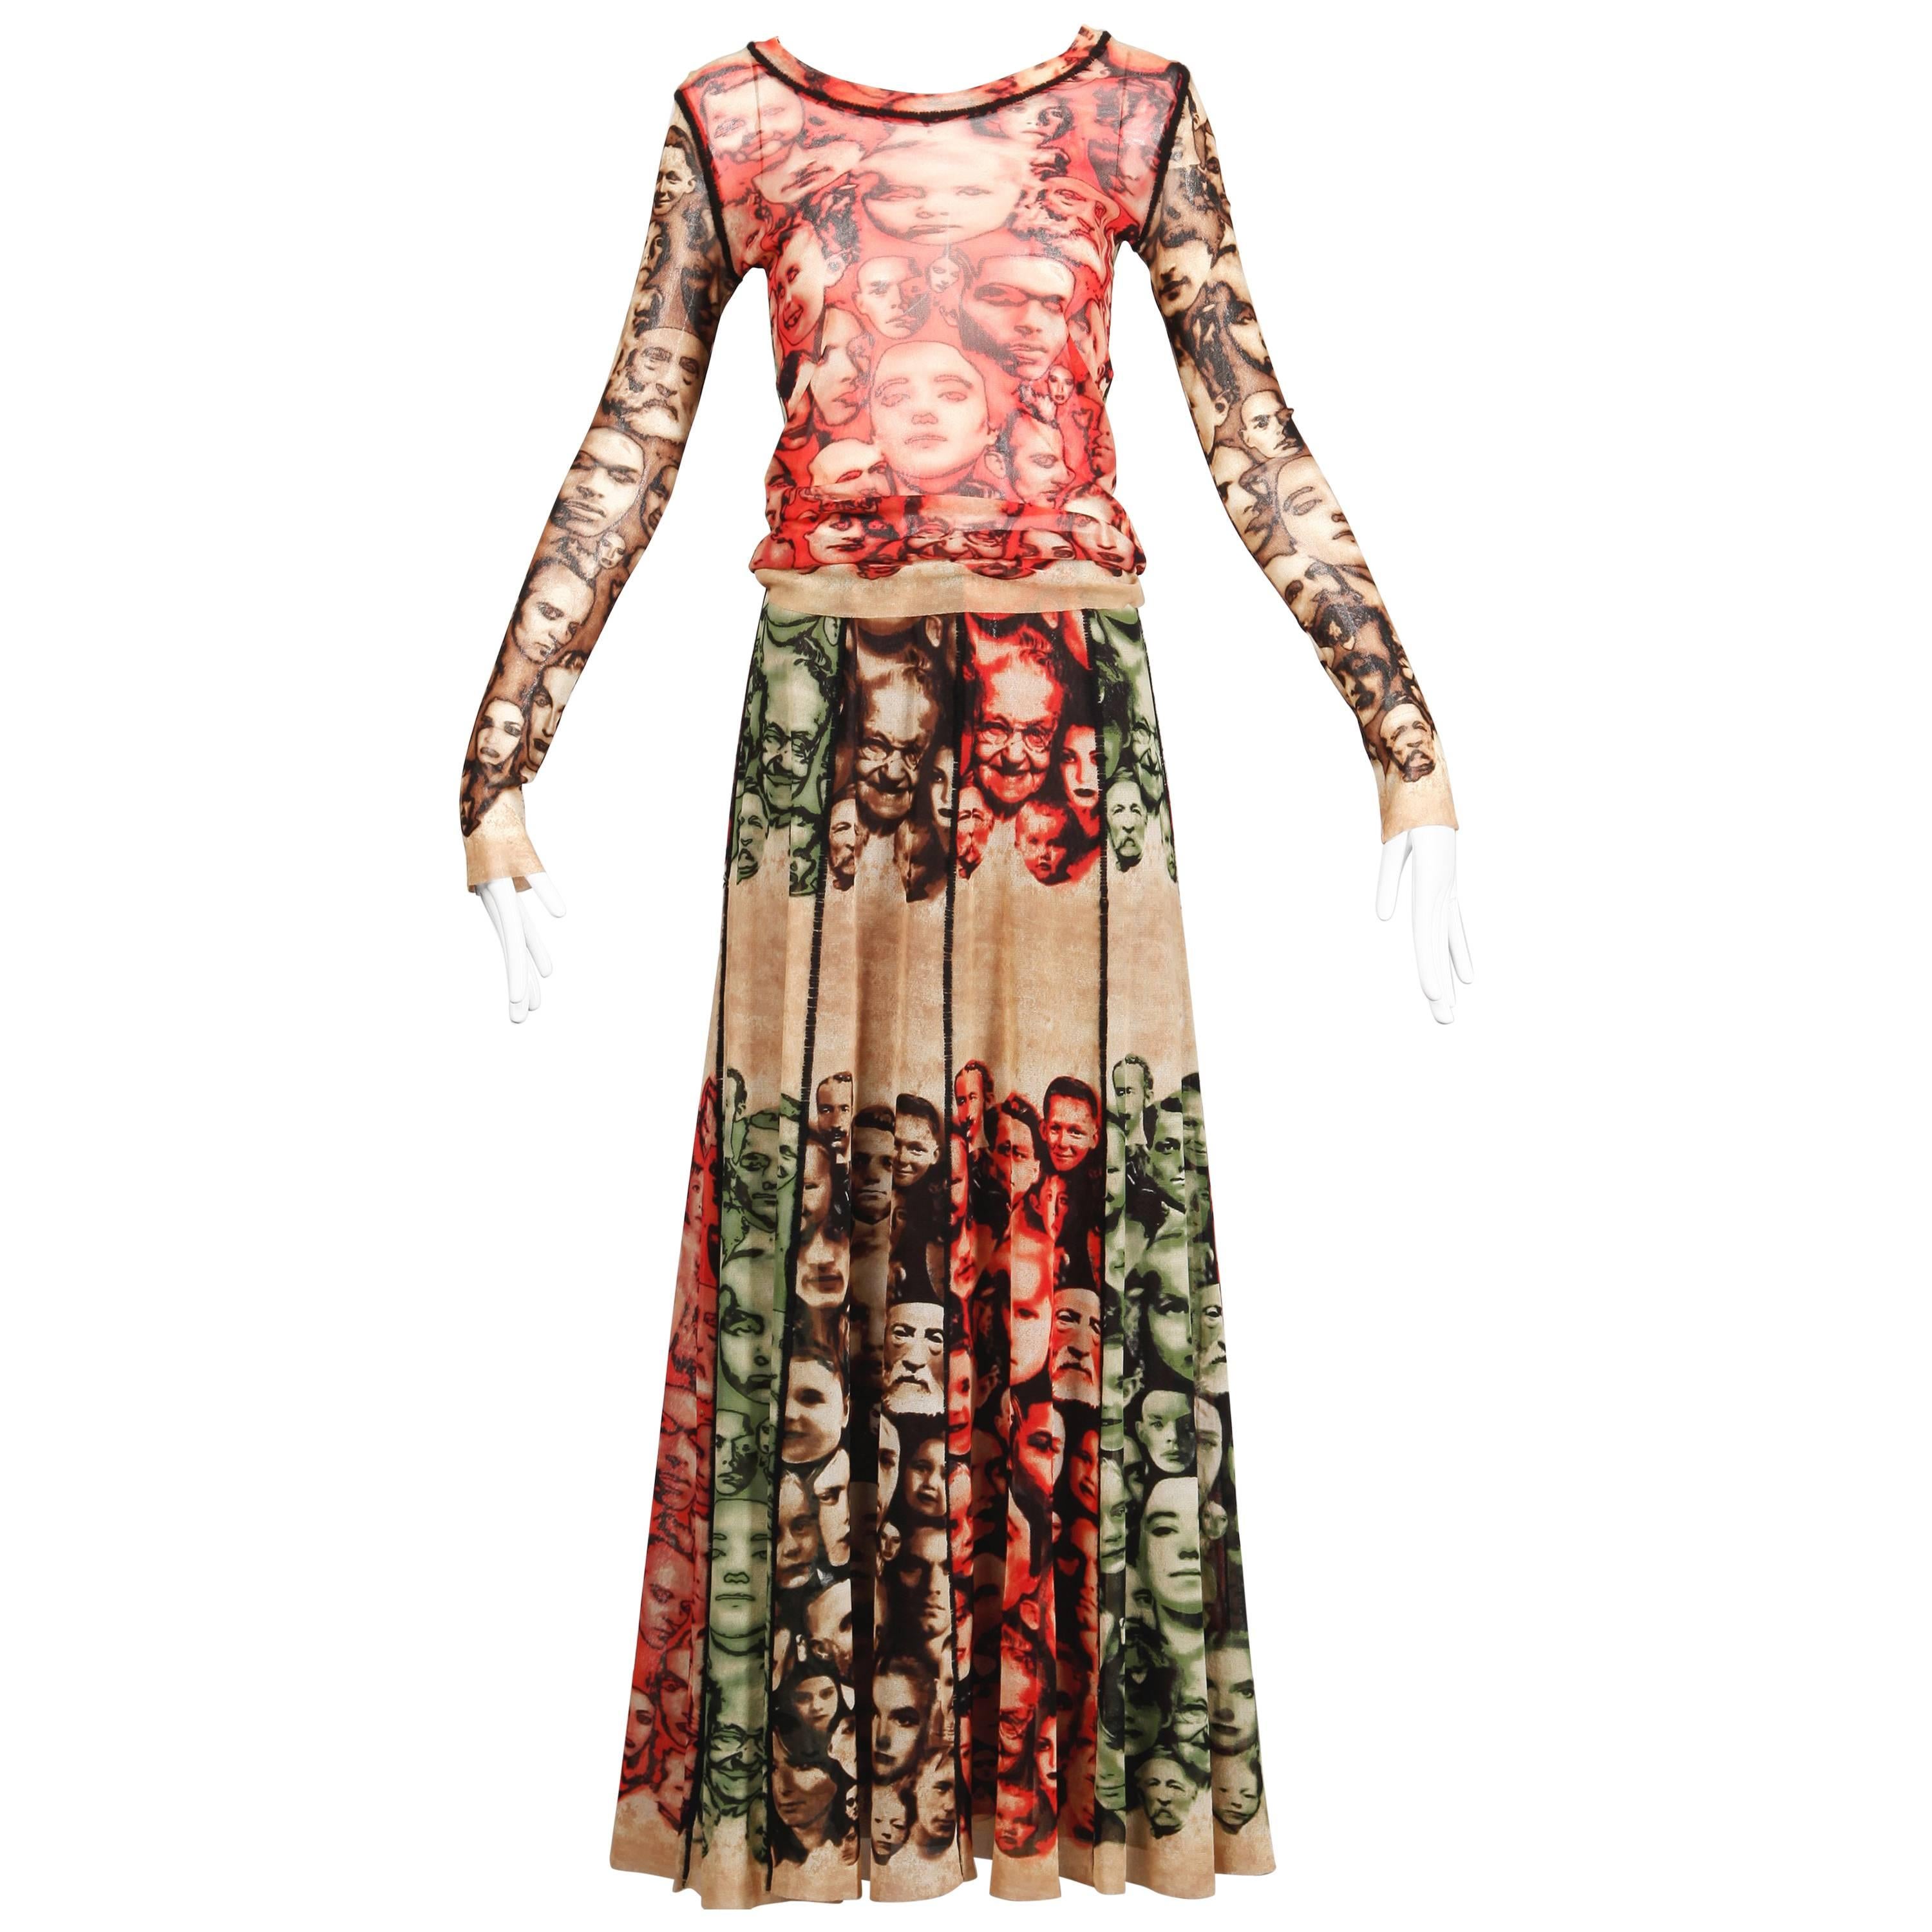 Jean Paul Gaultier Mesh "Faces" Top + Skirt Dress Ensemble